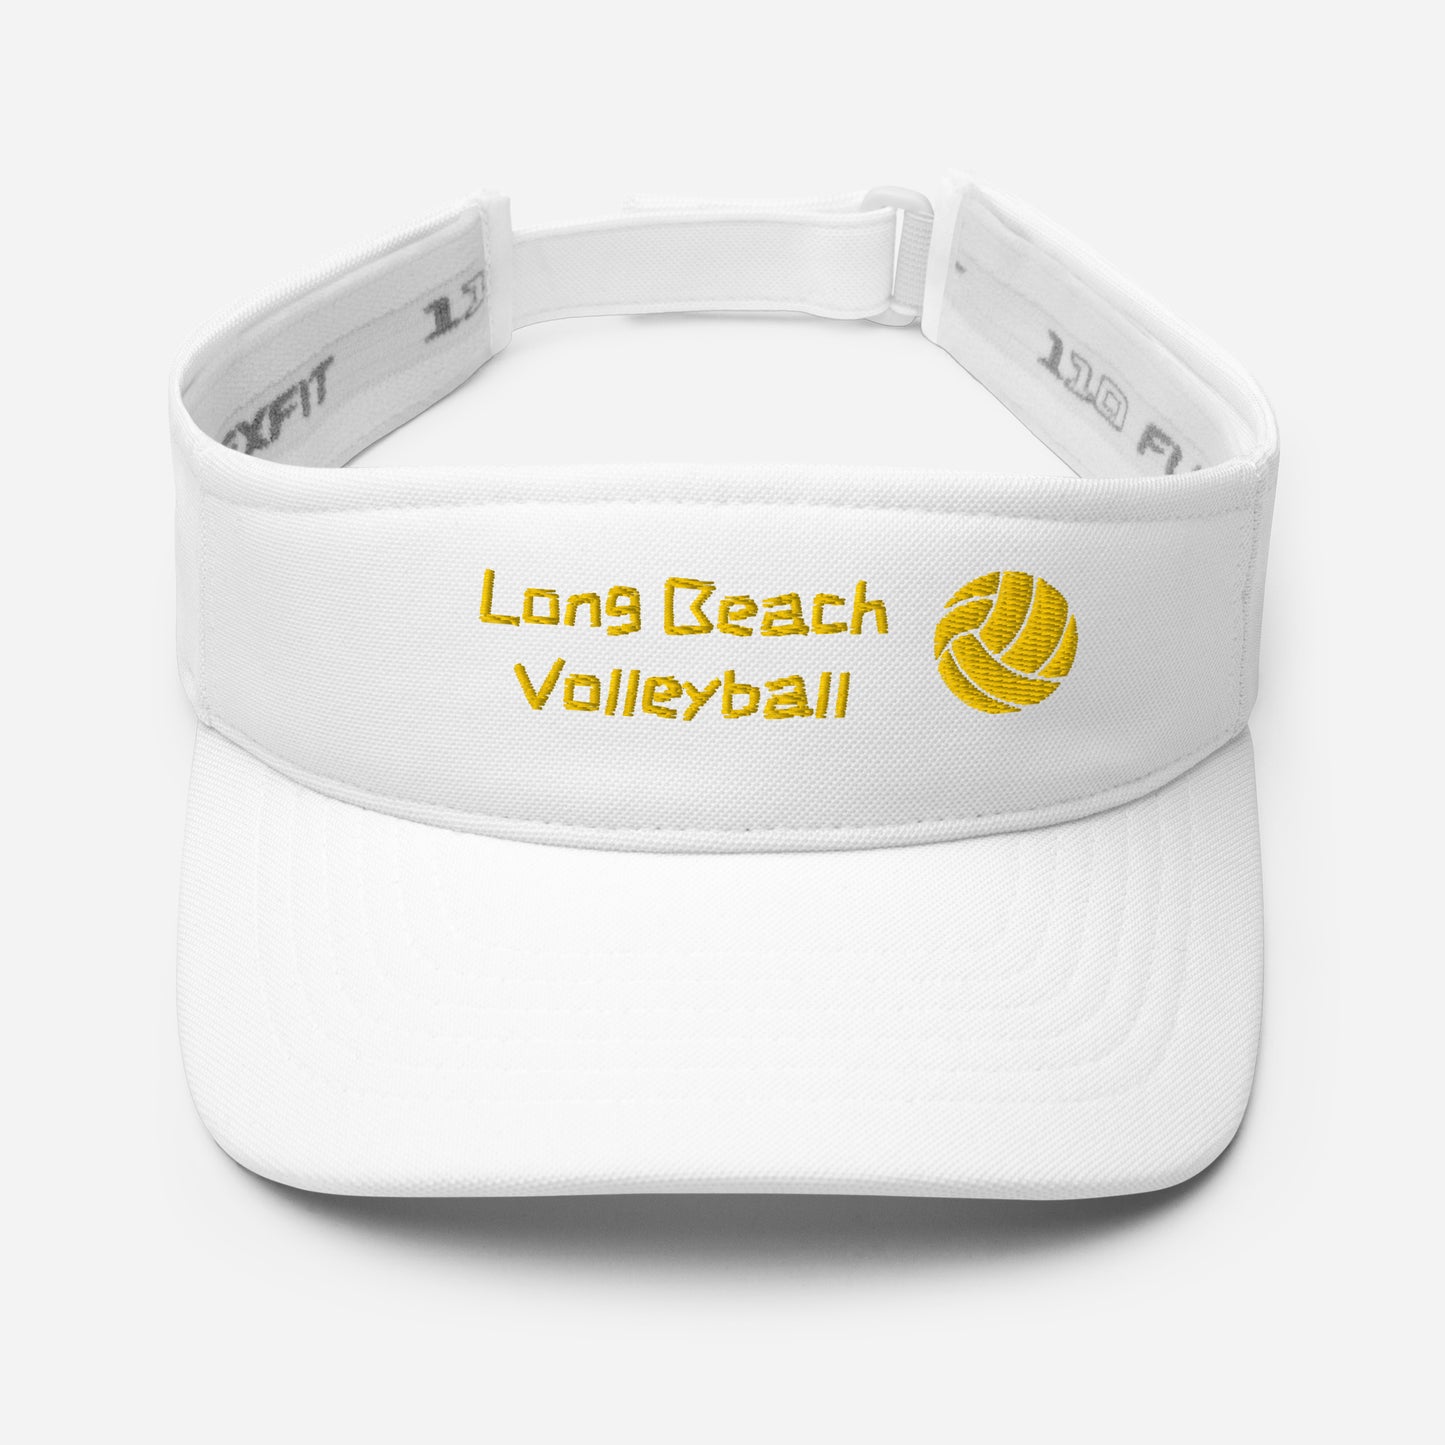 Long Beach Volleyball California Visor